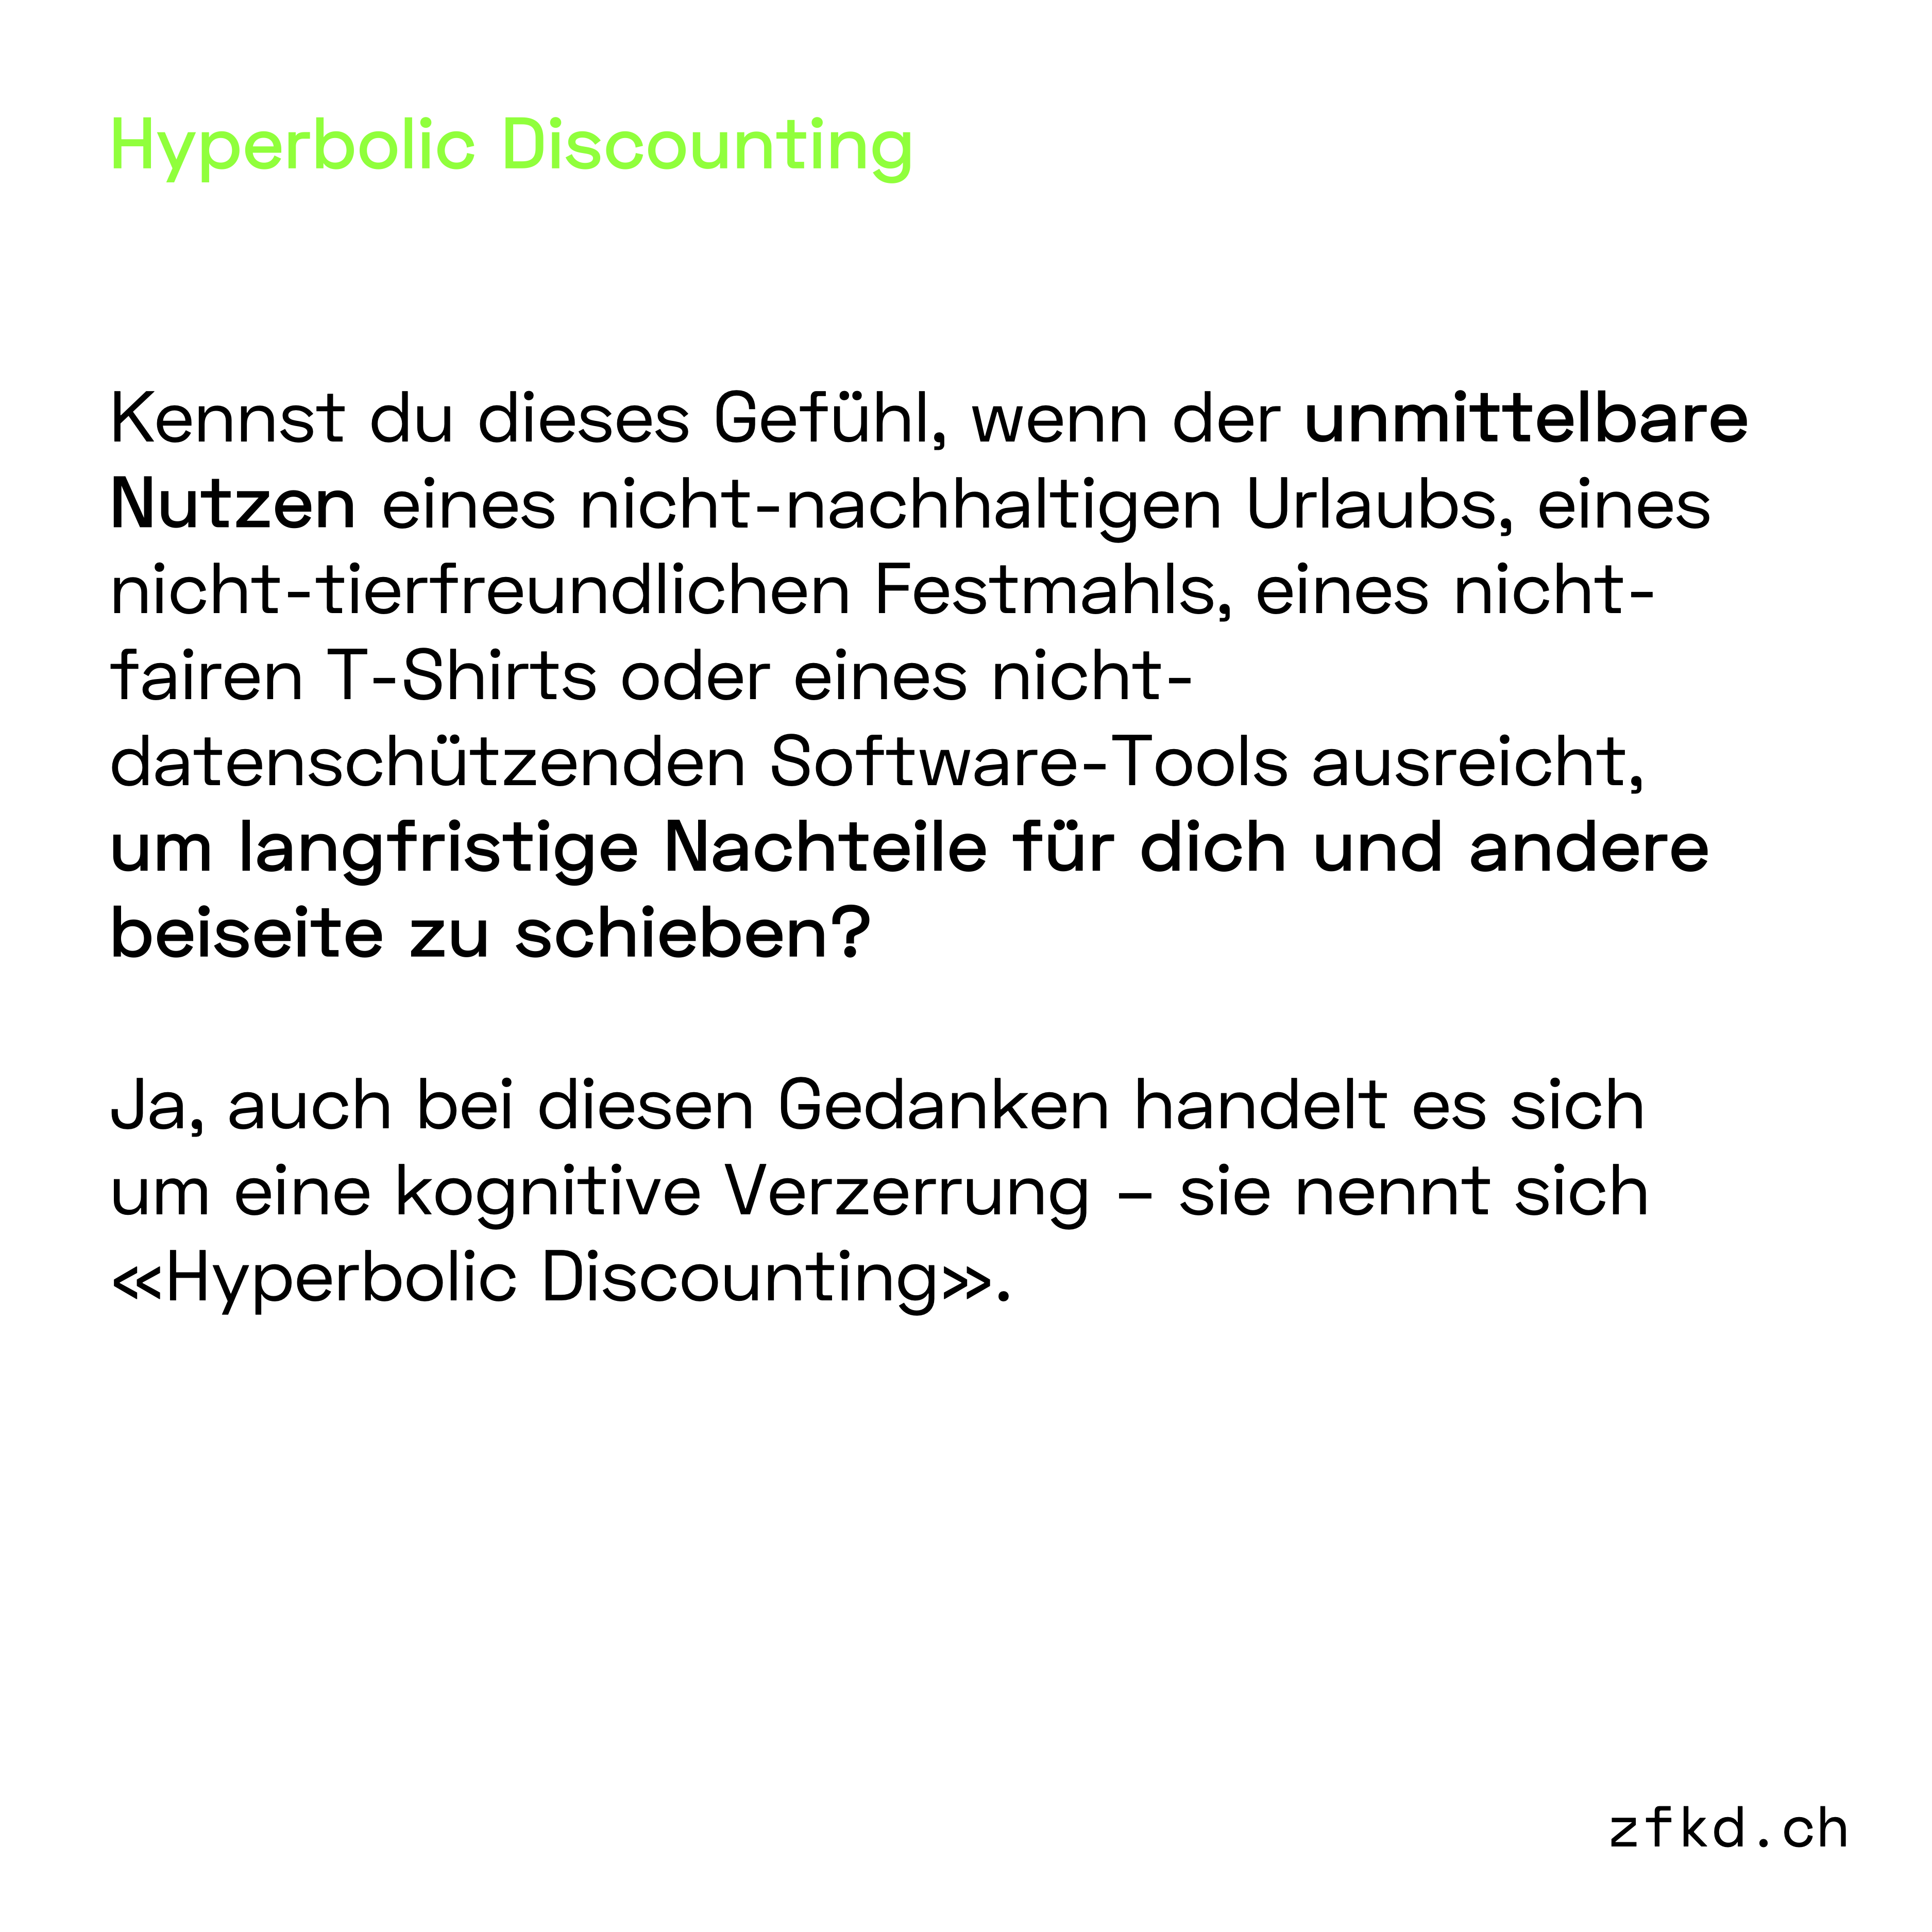 idasi_hyperbolic-discounting_3